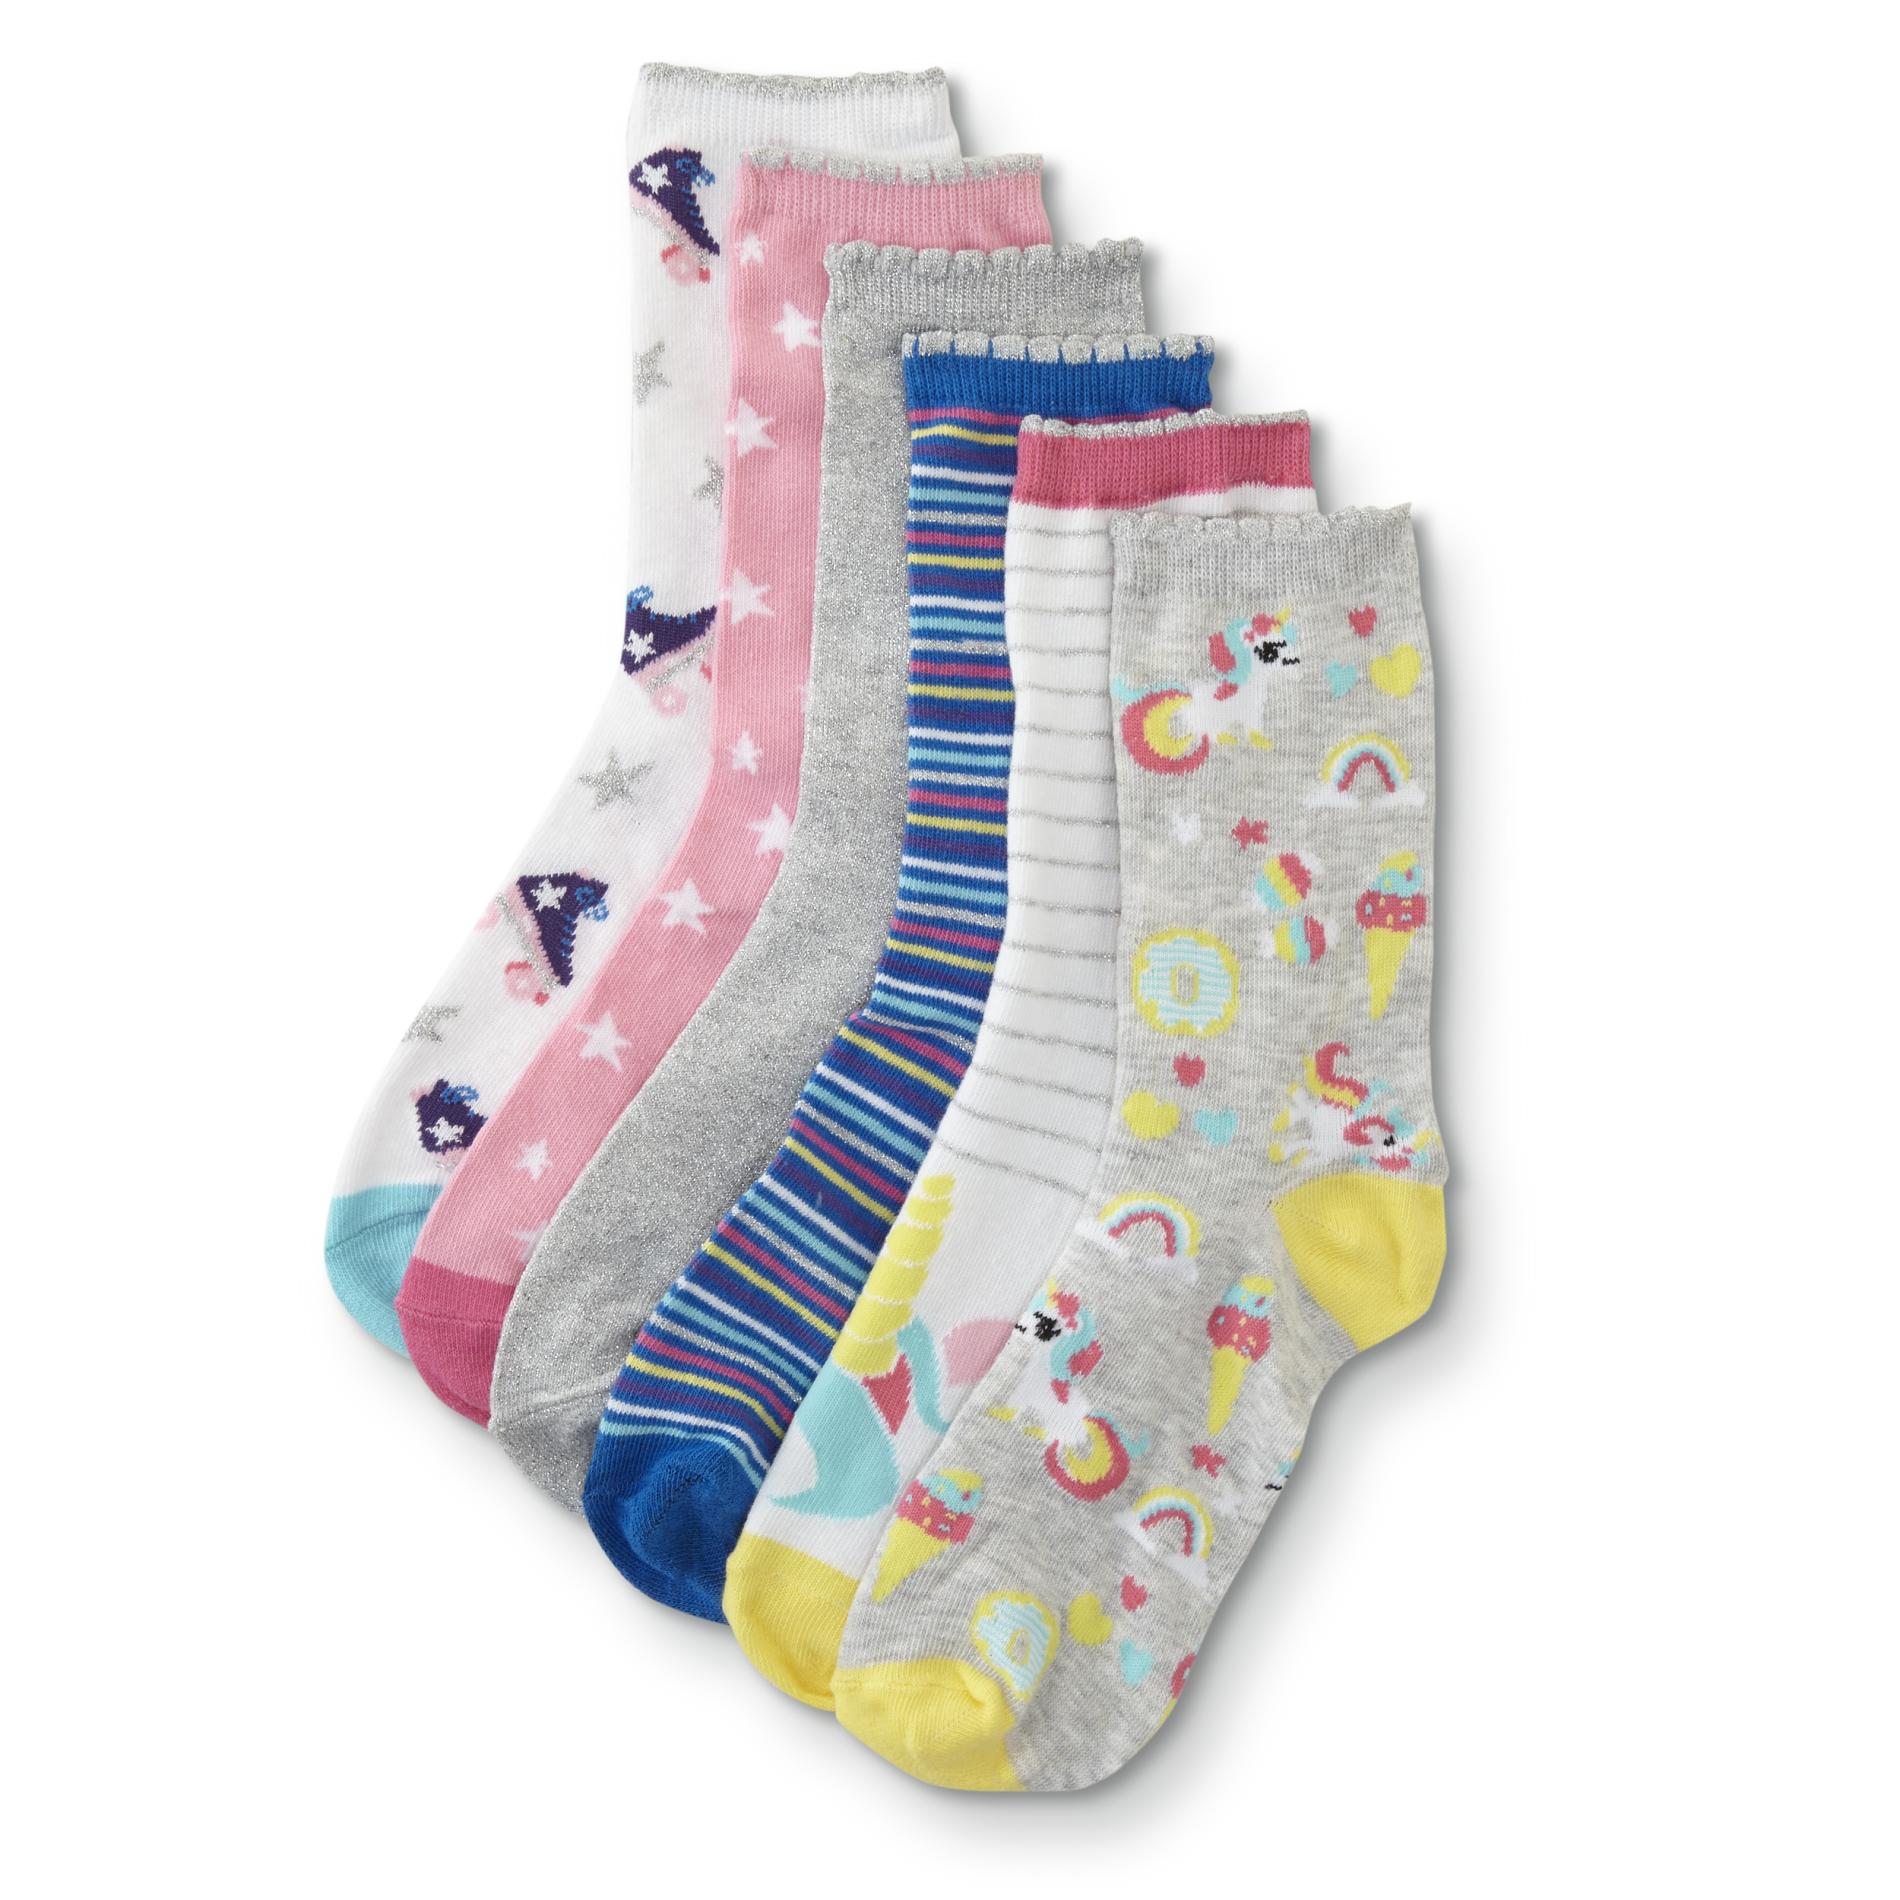 Joe Boxer Girls' 6-Pairs Fashion Crew Socks - Unicorn/Retro